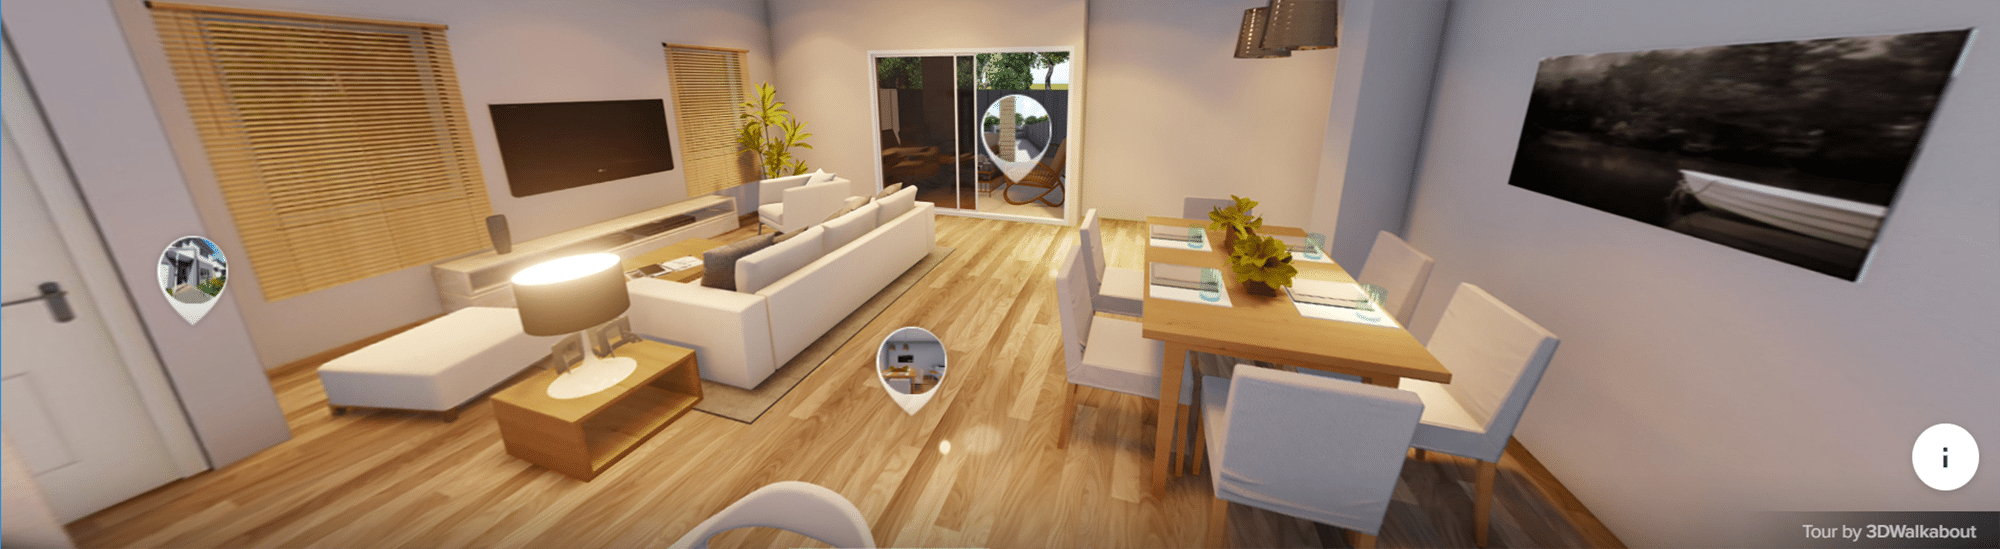  3D Virtual Tour House Plans  Off Plan  360 Walkthroughs